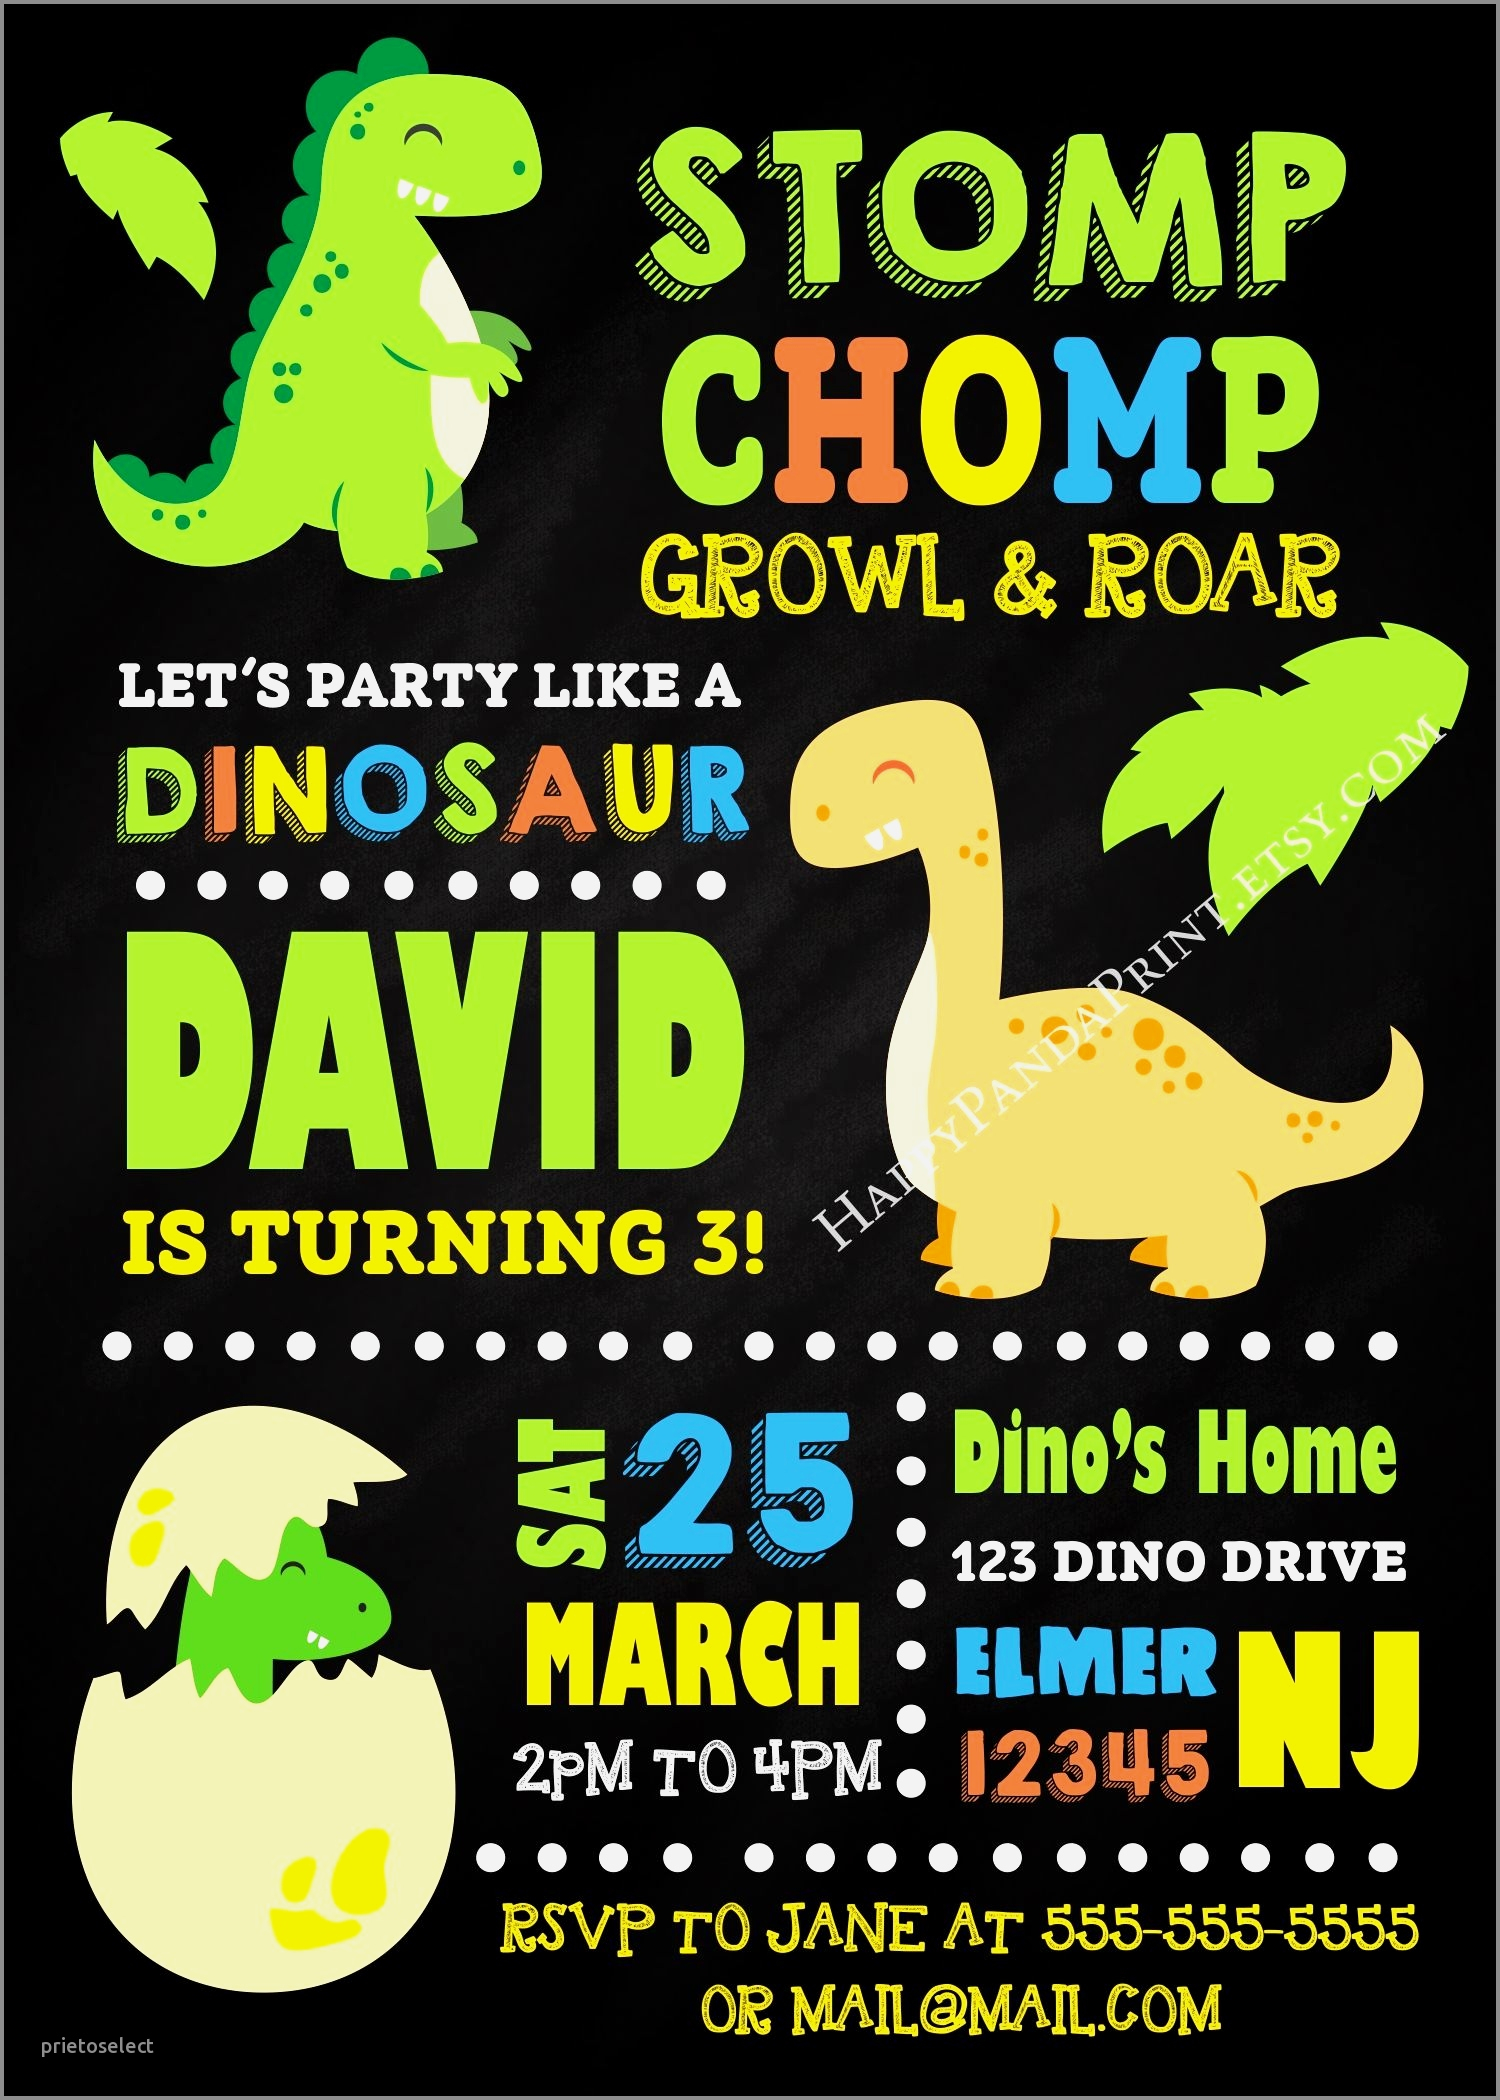 Dinosaur Train Birthday Party Invitations Australia Themed Girl intended for size 1500 X 2100